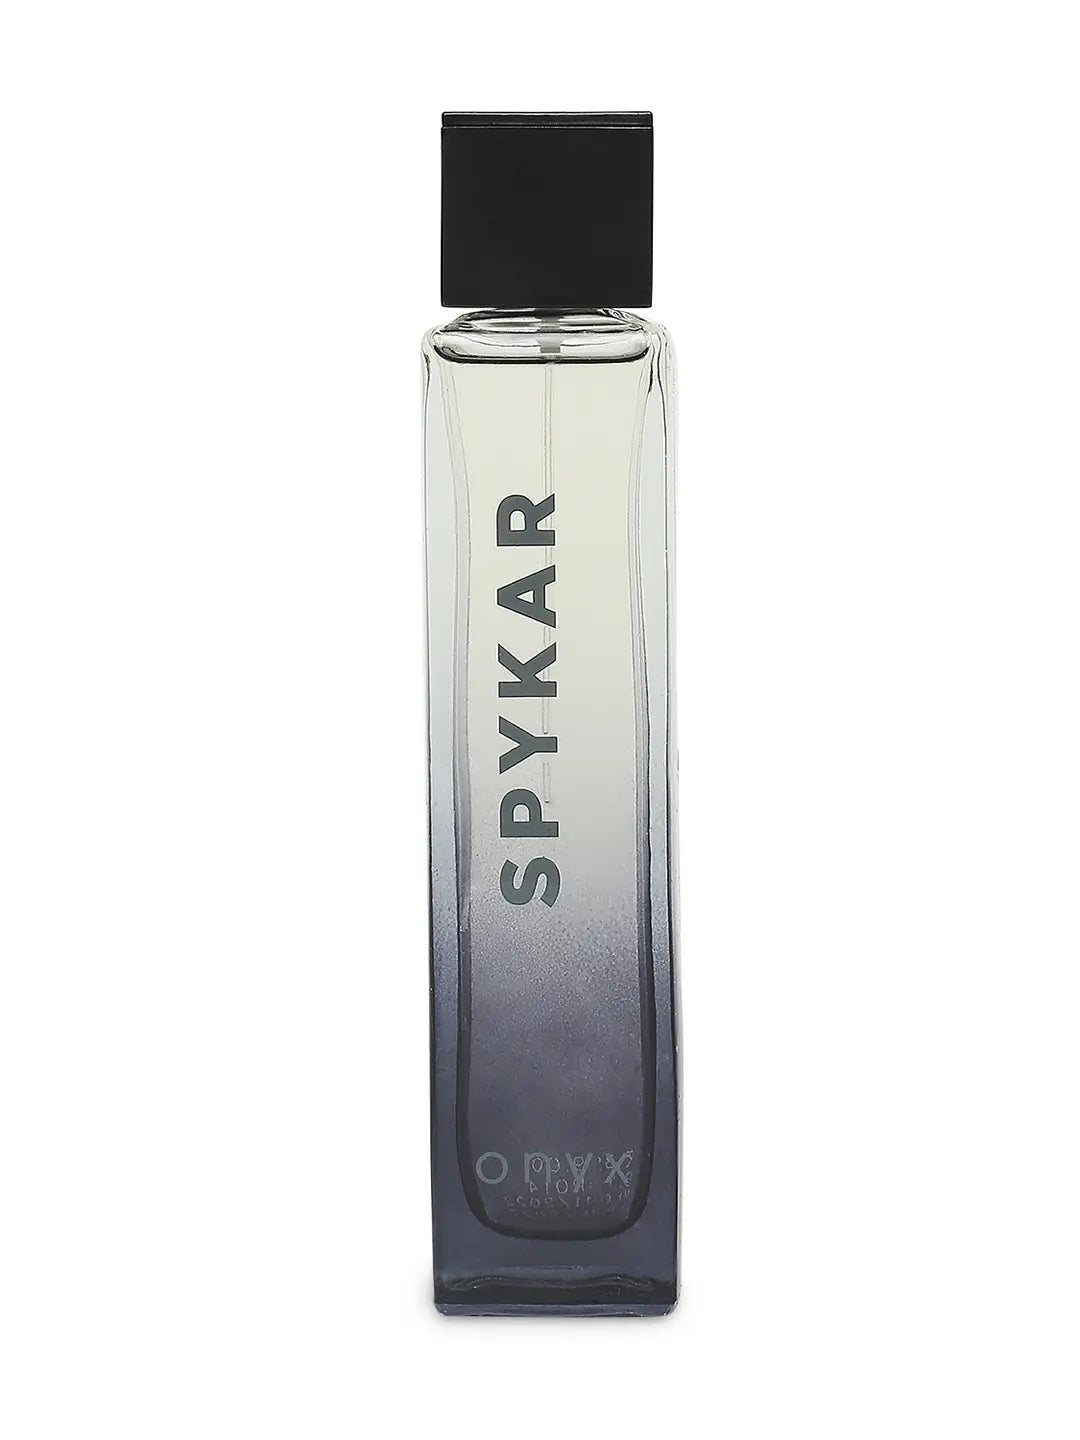 Spykar Black Onyx & Forever All Day Long Deo & Perfume